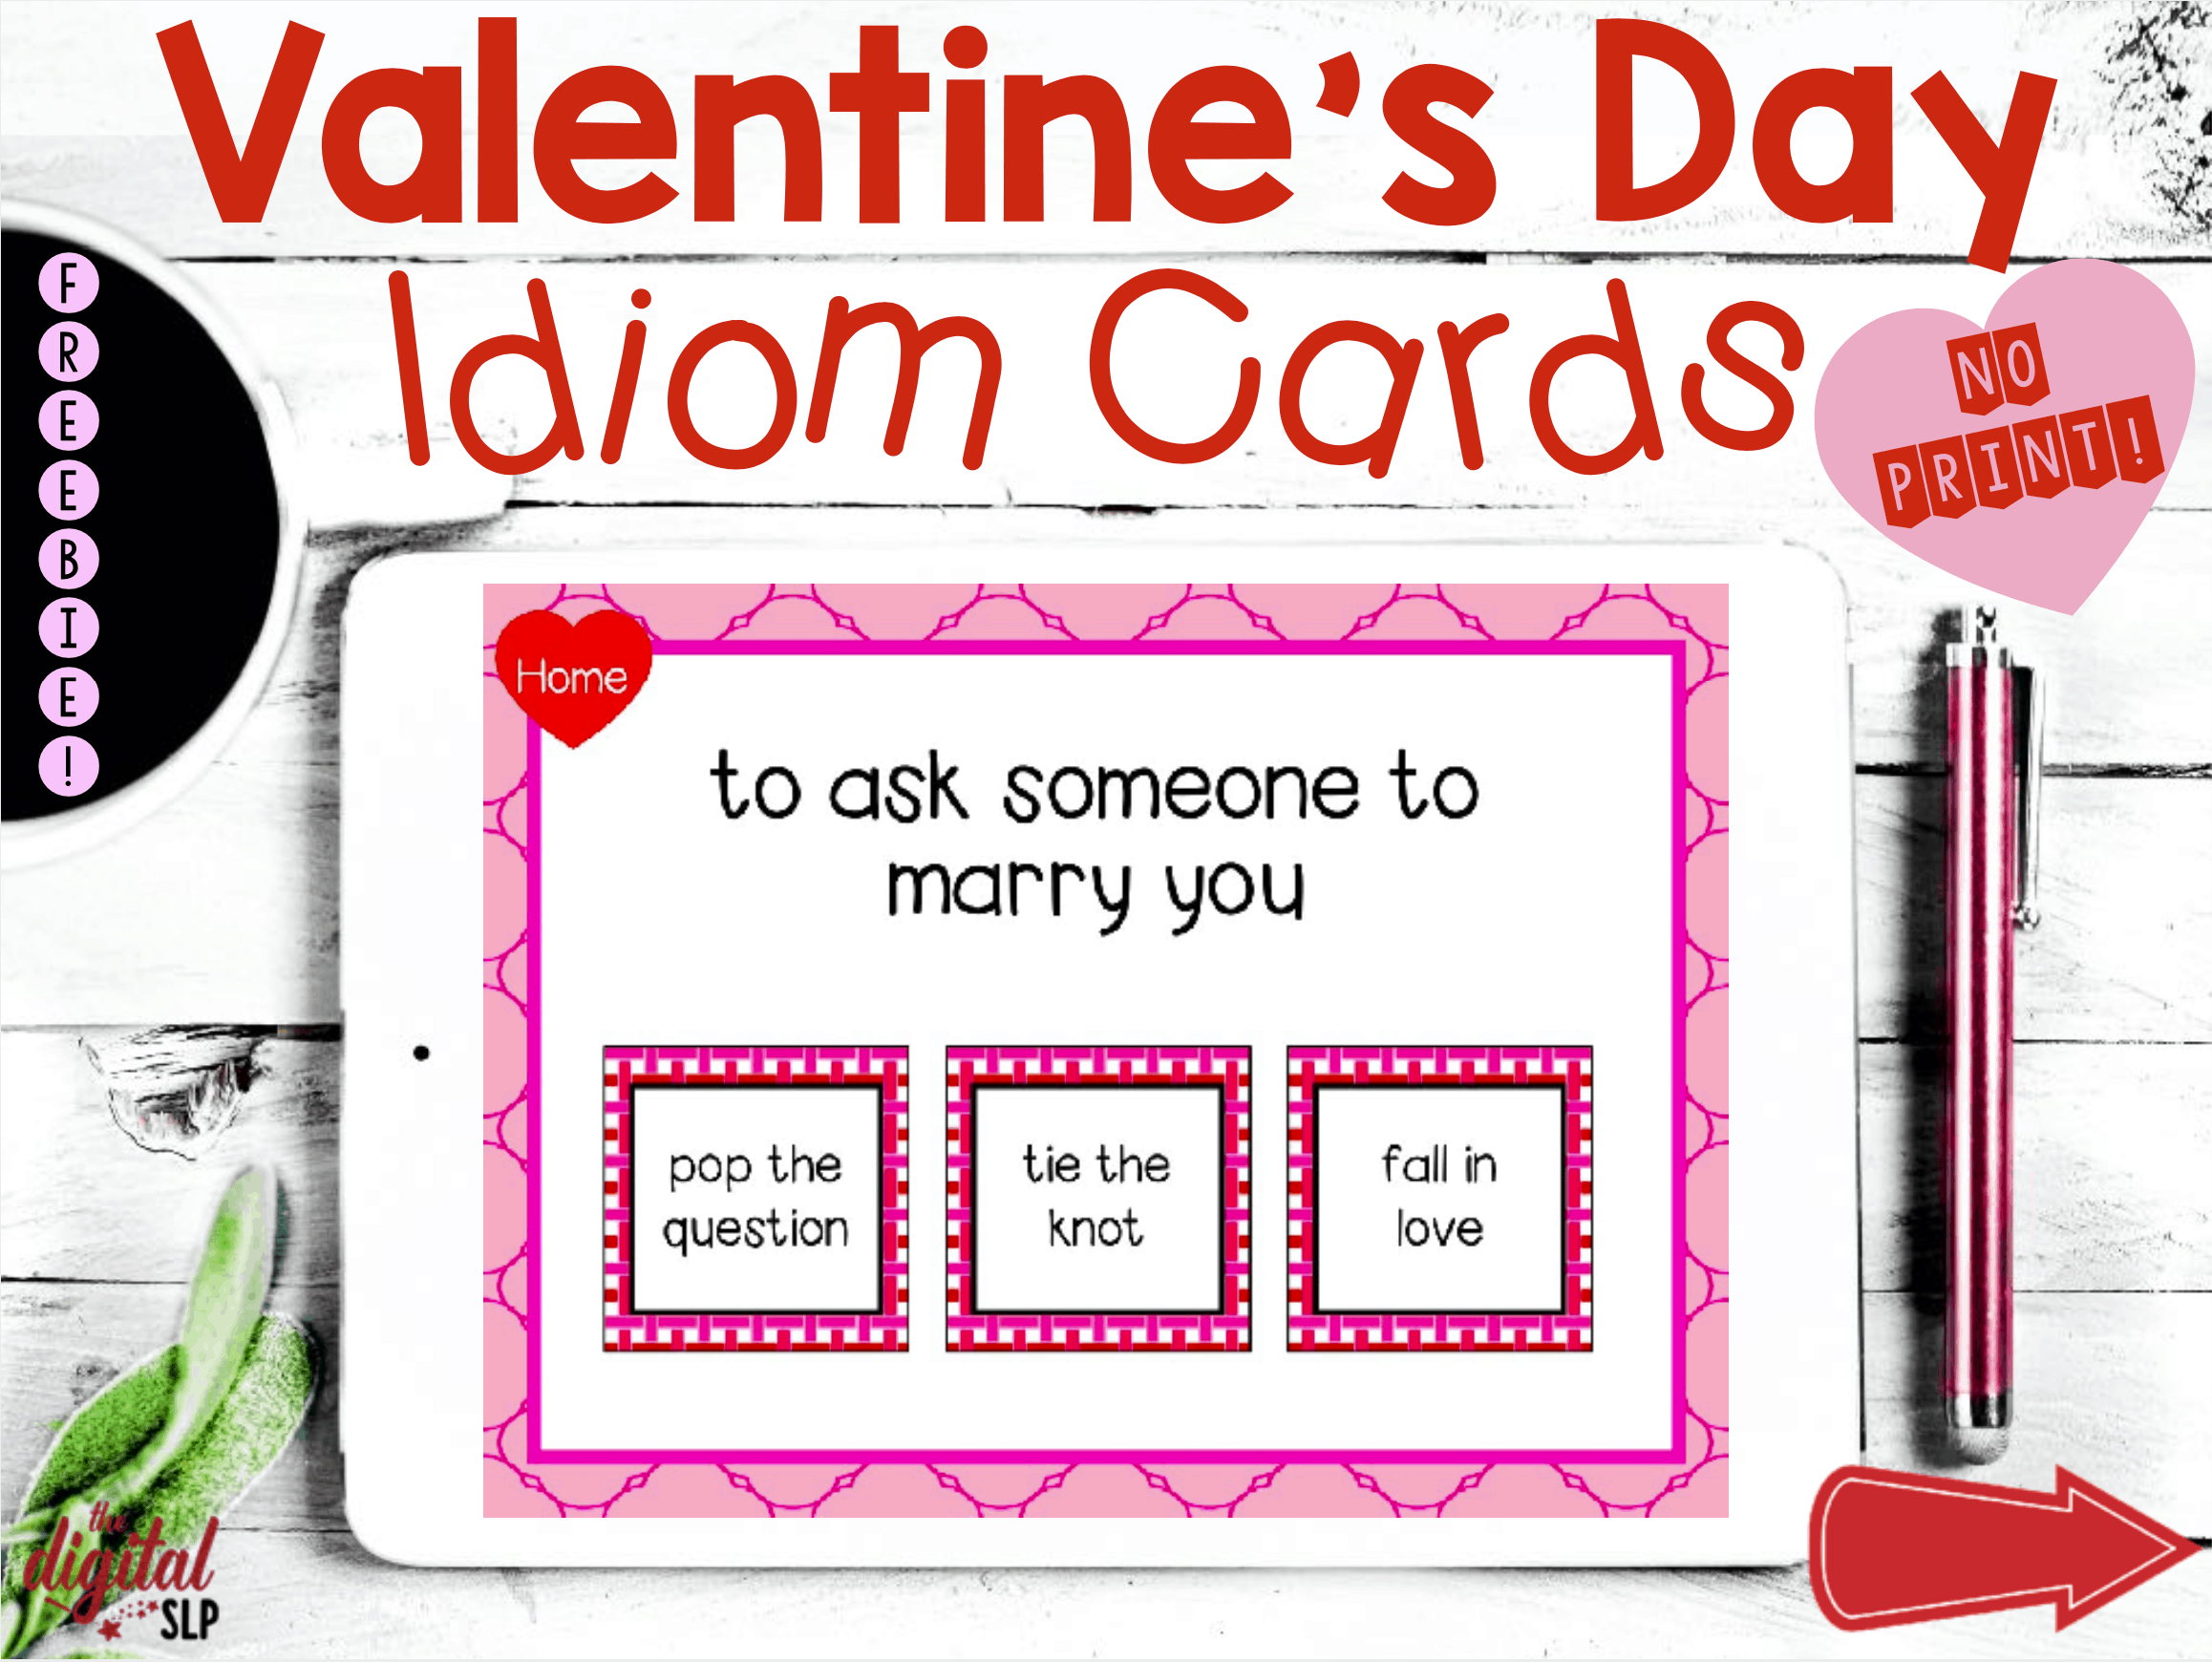 Valentine's Day Idiom Cards FREE No Print - The DIgital SLP